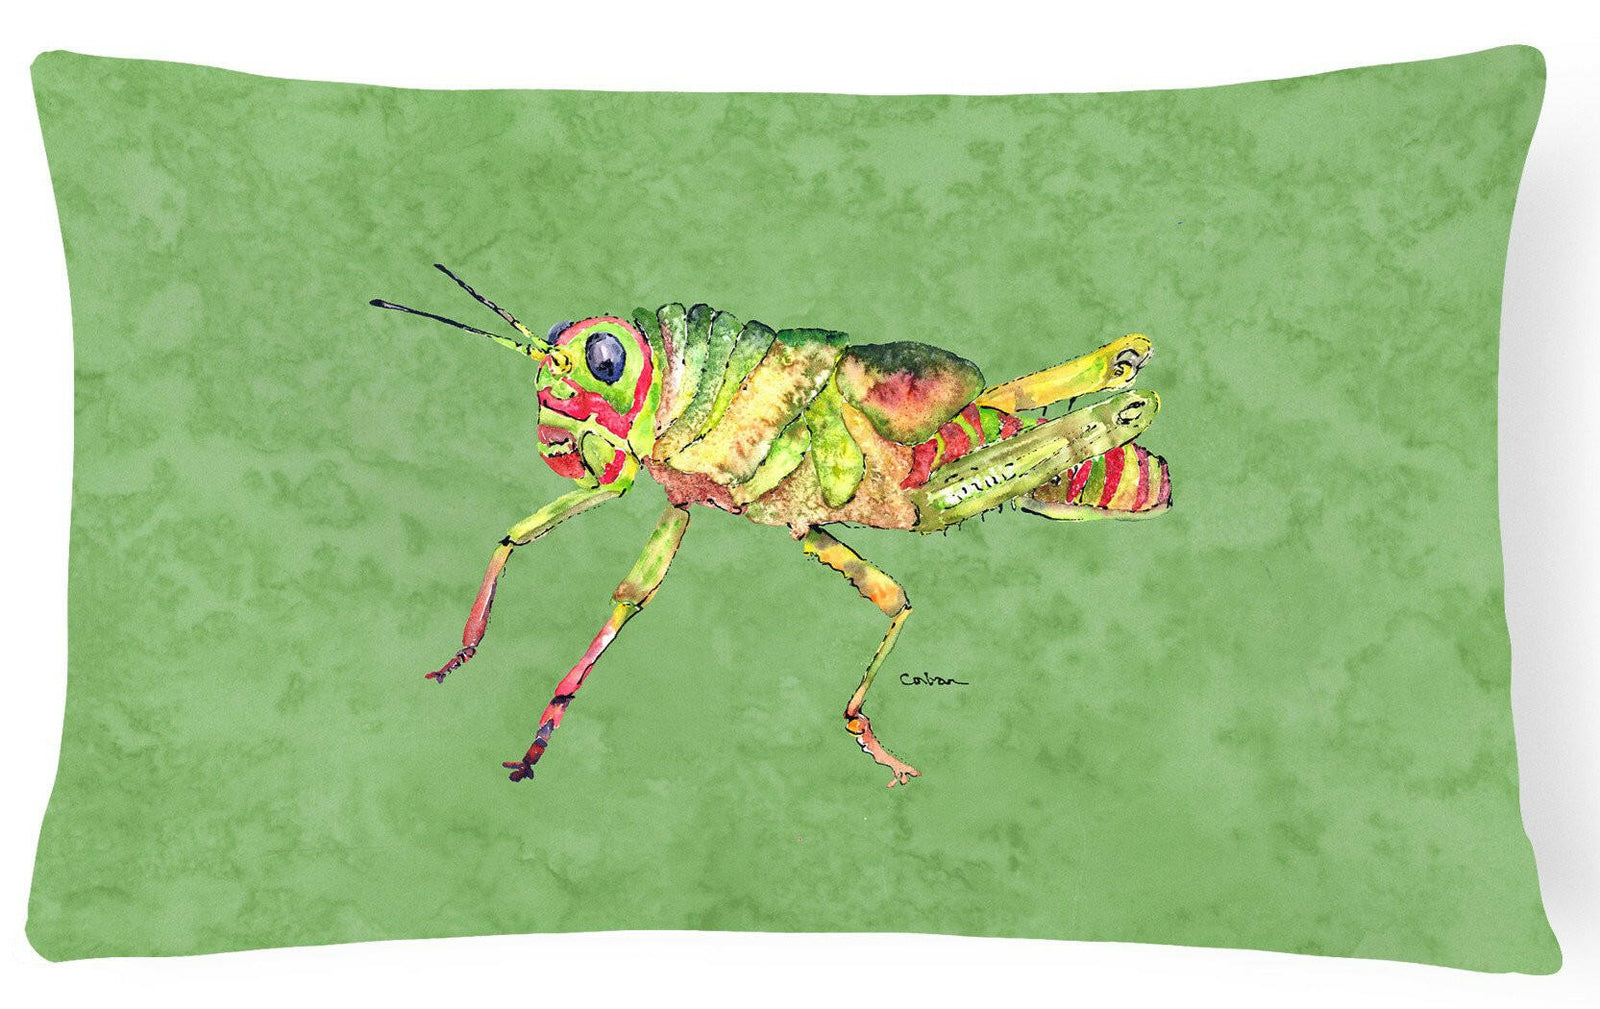 Grasshopper on Avacado   Canvas Fabric Decorative Pillow by Caroline's Treasures